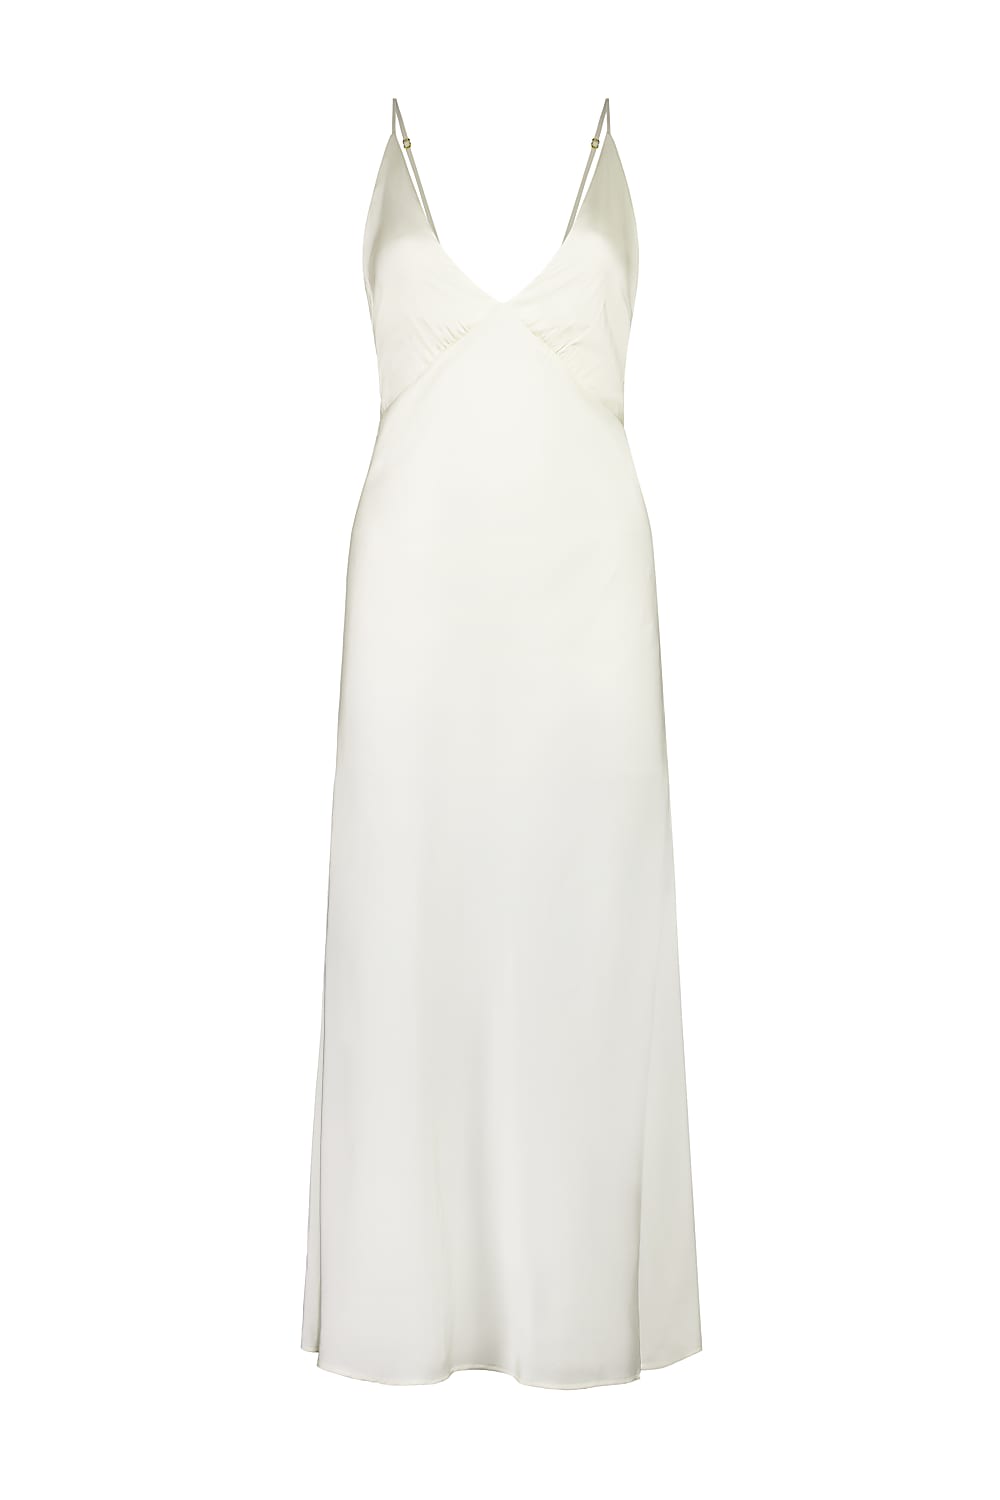 Gingerlilly Sleepwear Women's Neutrals Freda Ivory Satin Long Chemise In White